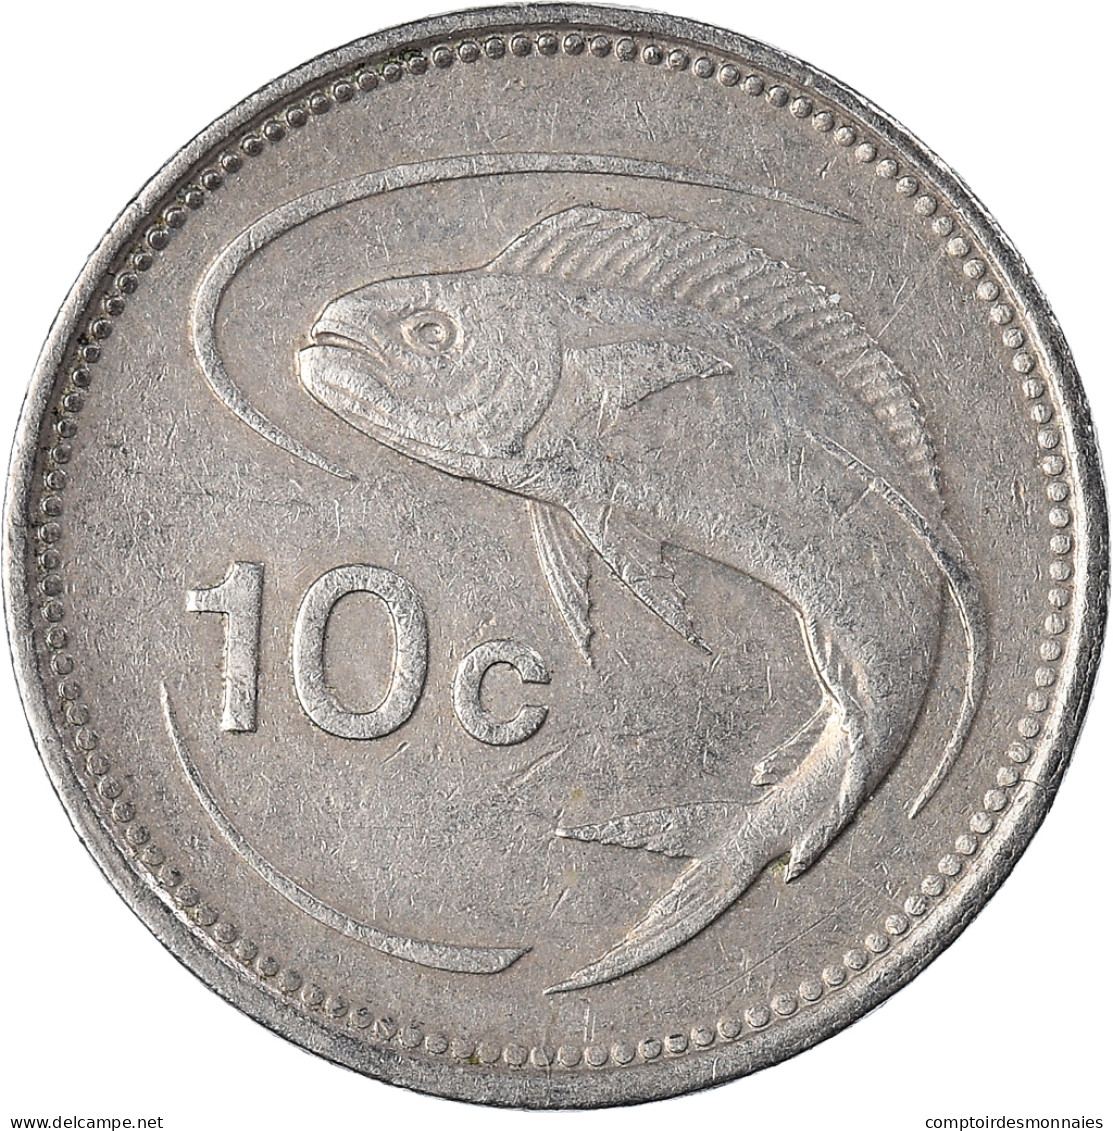 Monnaie, Malte, 10 Cents, 1986 - Malte